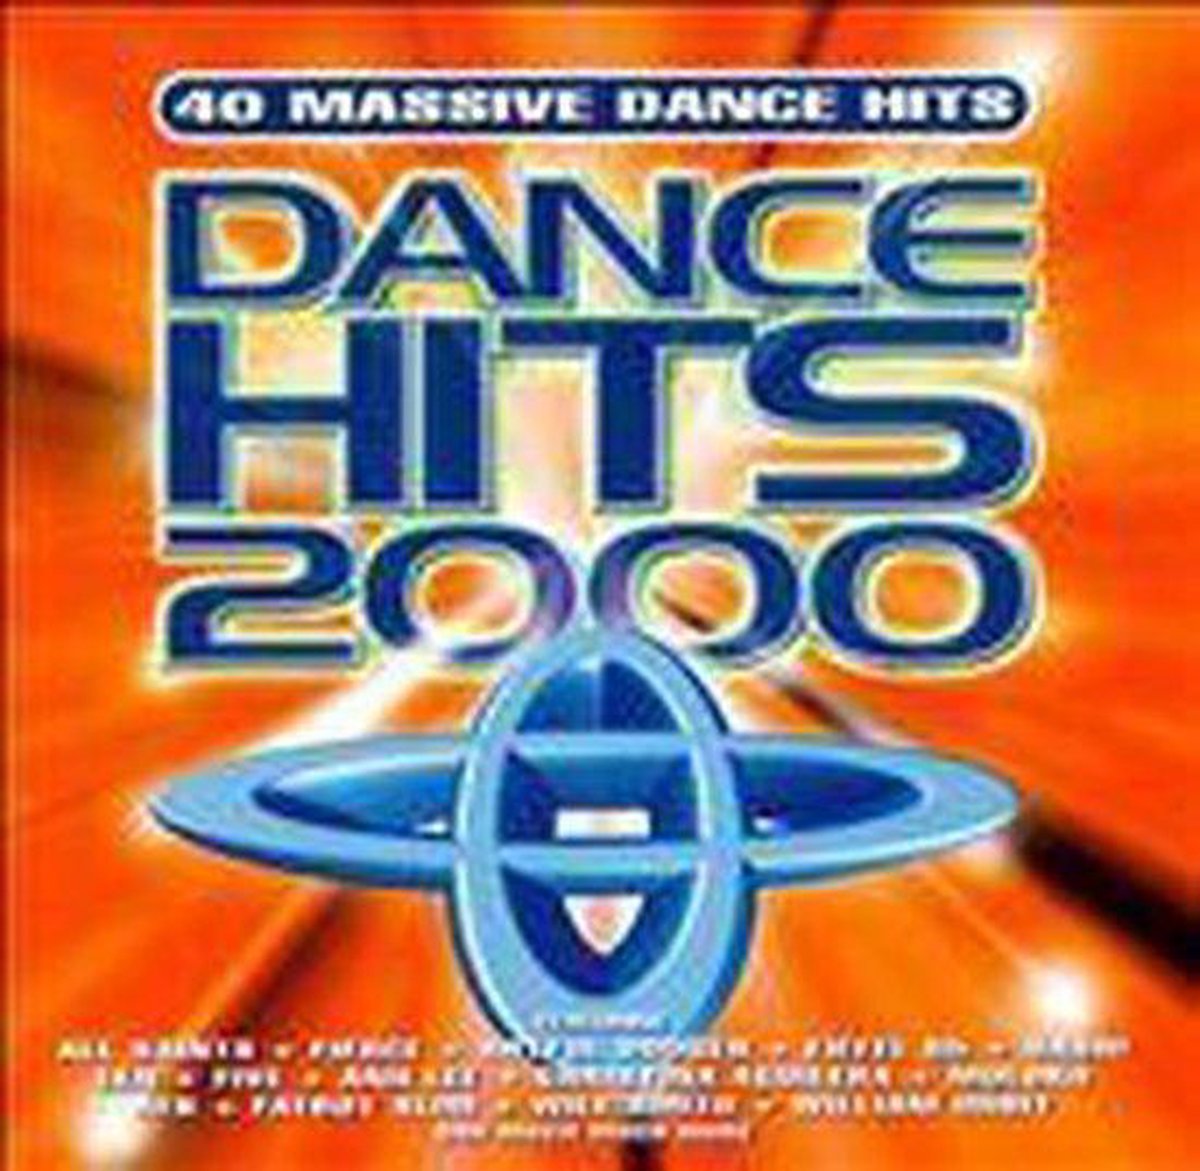 Dance Hits 2000 - various artists